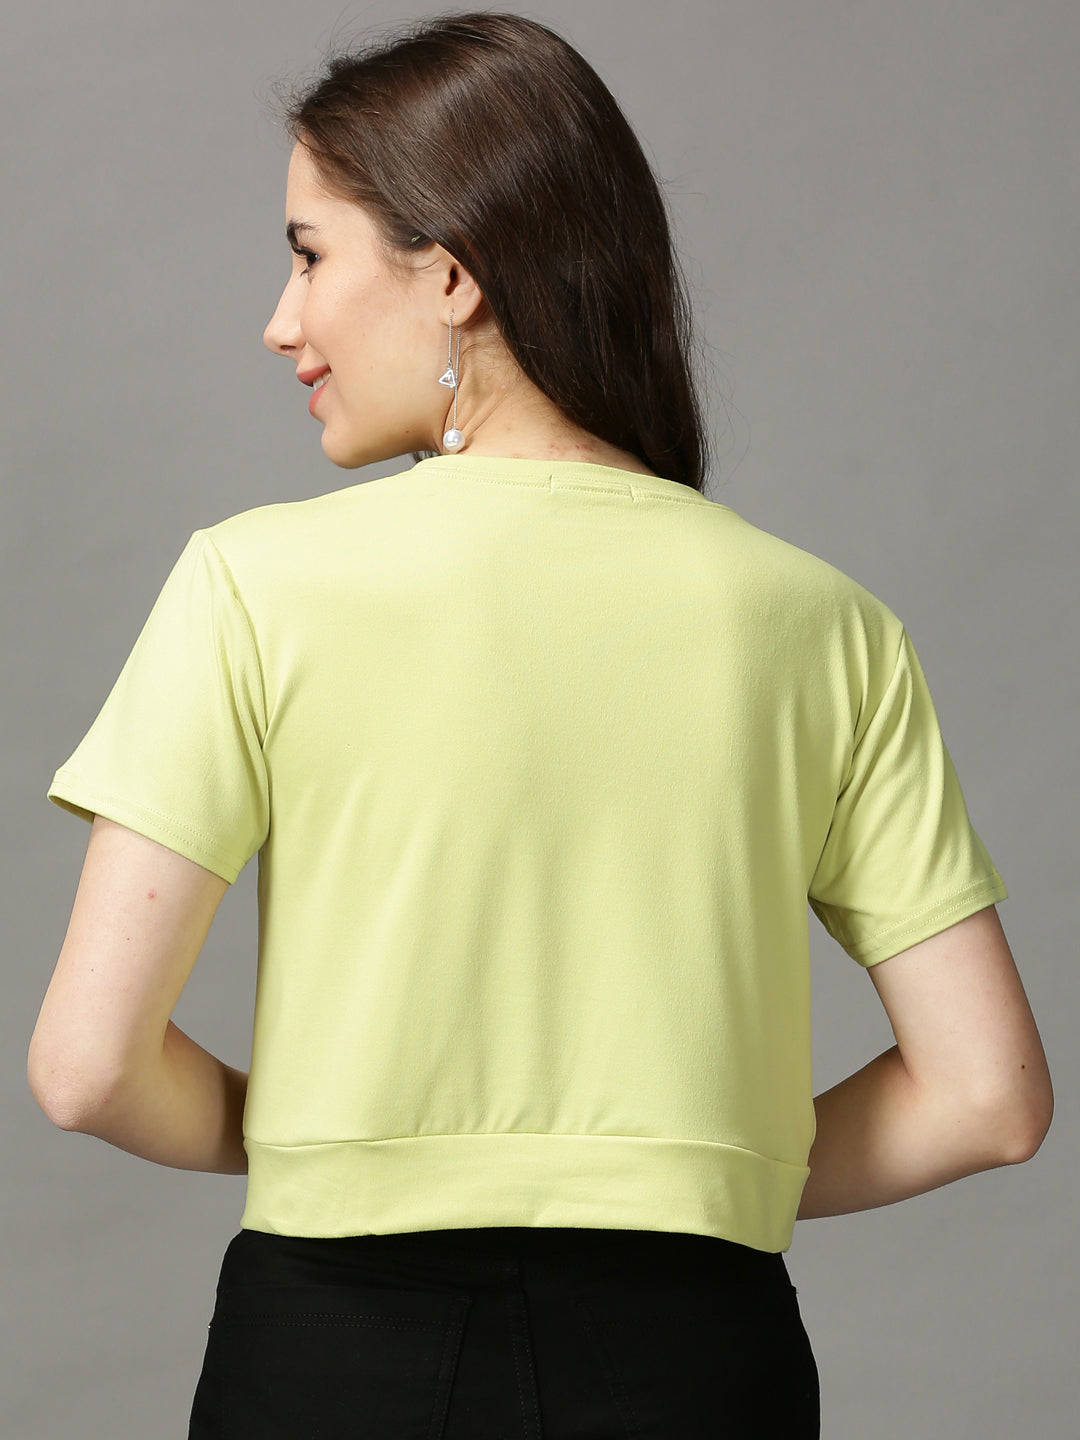 Women's Lime Green Solid Crop Top